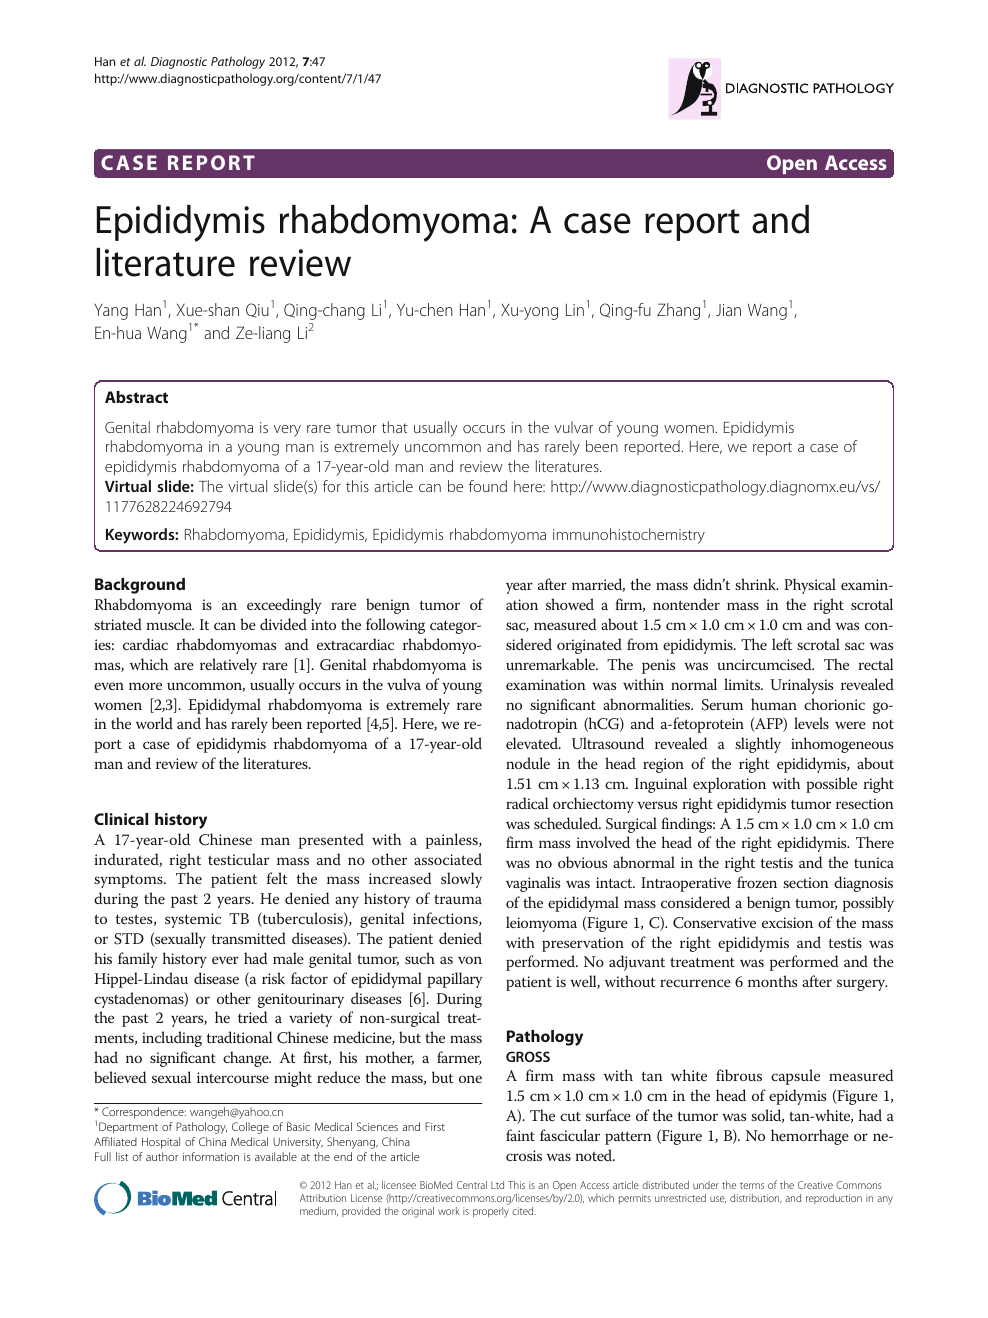 Epididymis rhabdomyoma: A case report and literature review